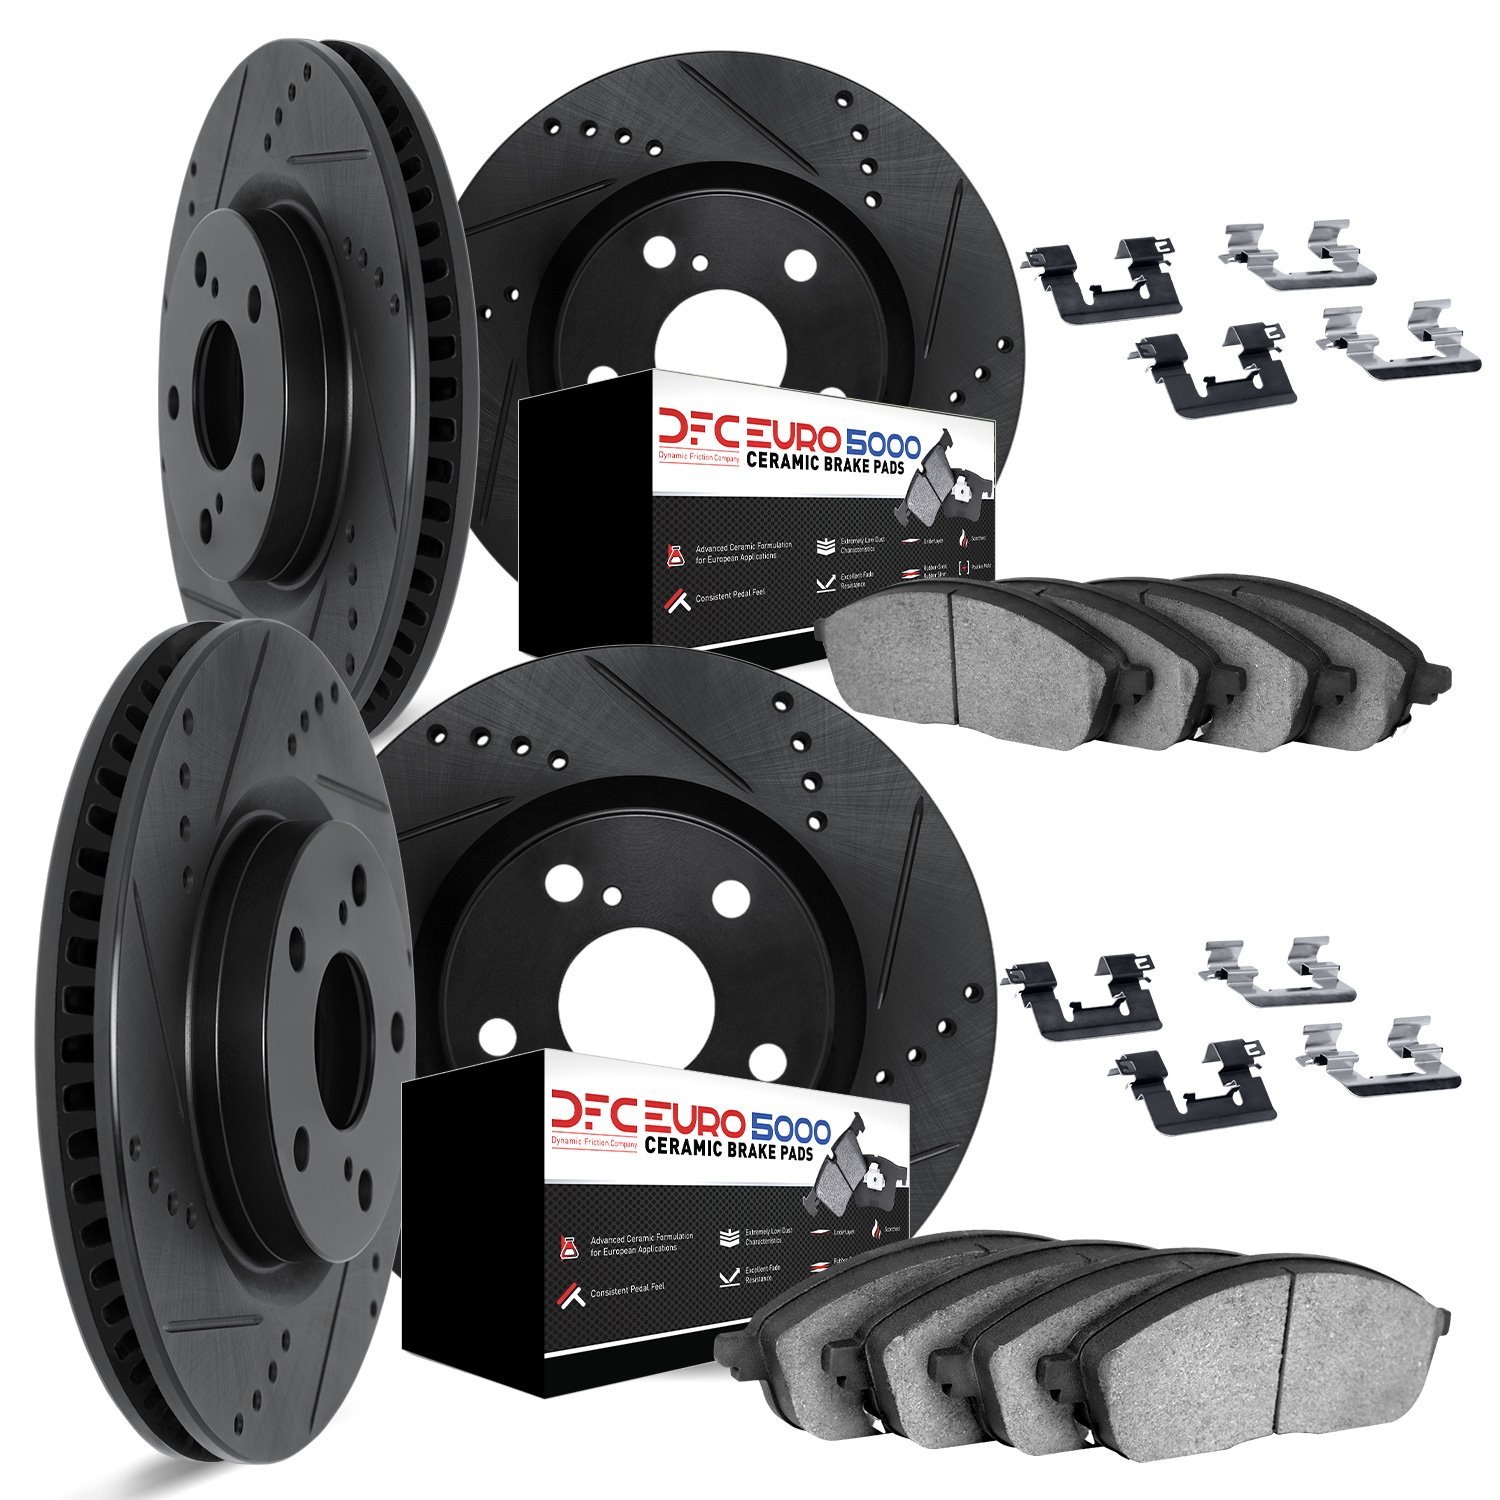 8614-31027 Drilled/Slotted Brake Rotors w/5000 Euro Ceramic Brake Pads Kit & Hardware [Black], 2013-2020 BMW, Position: Front an